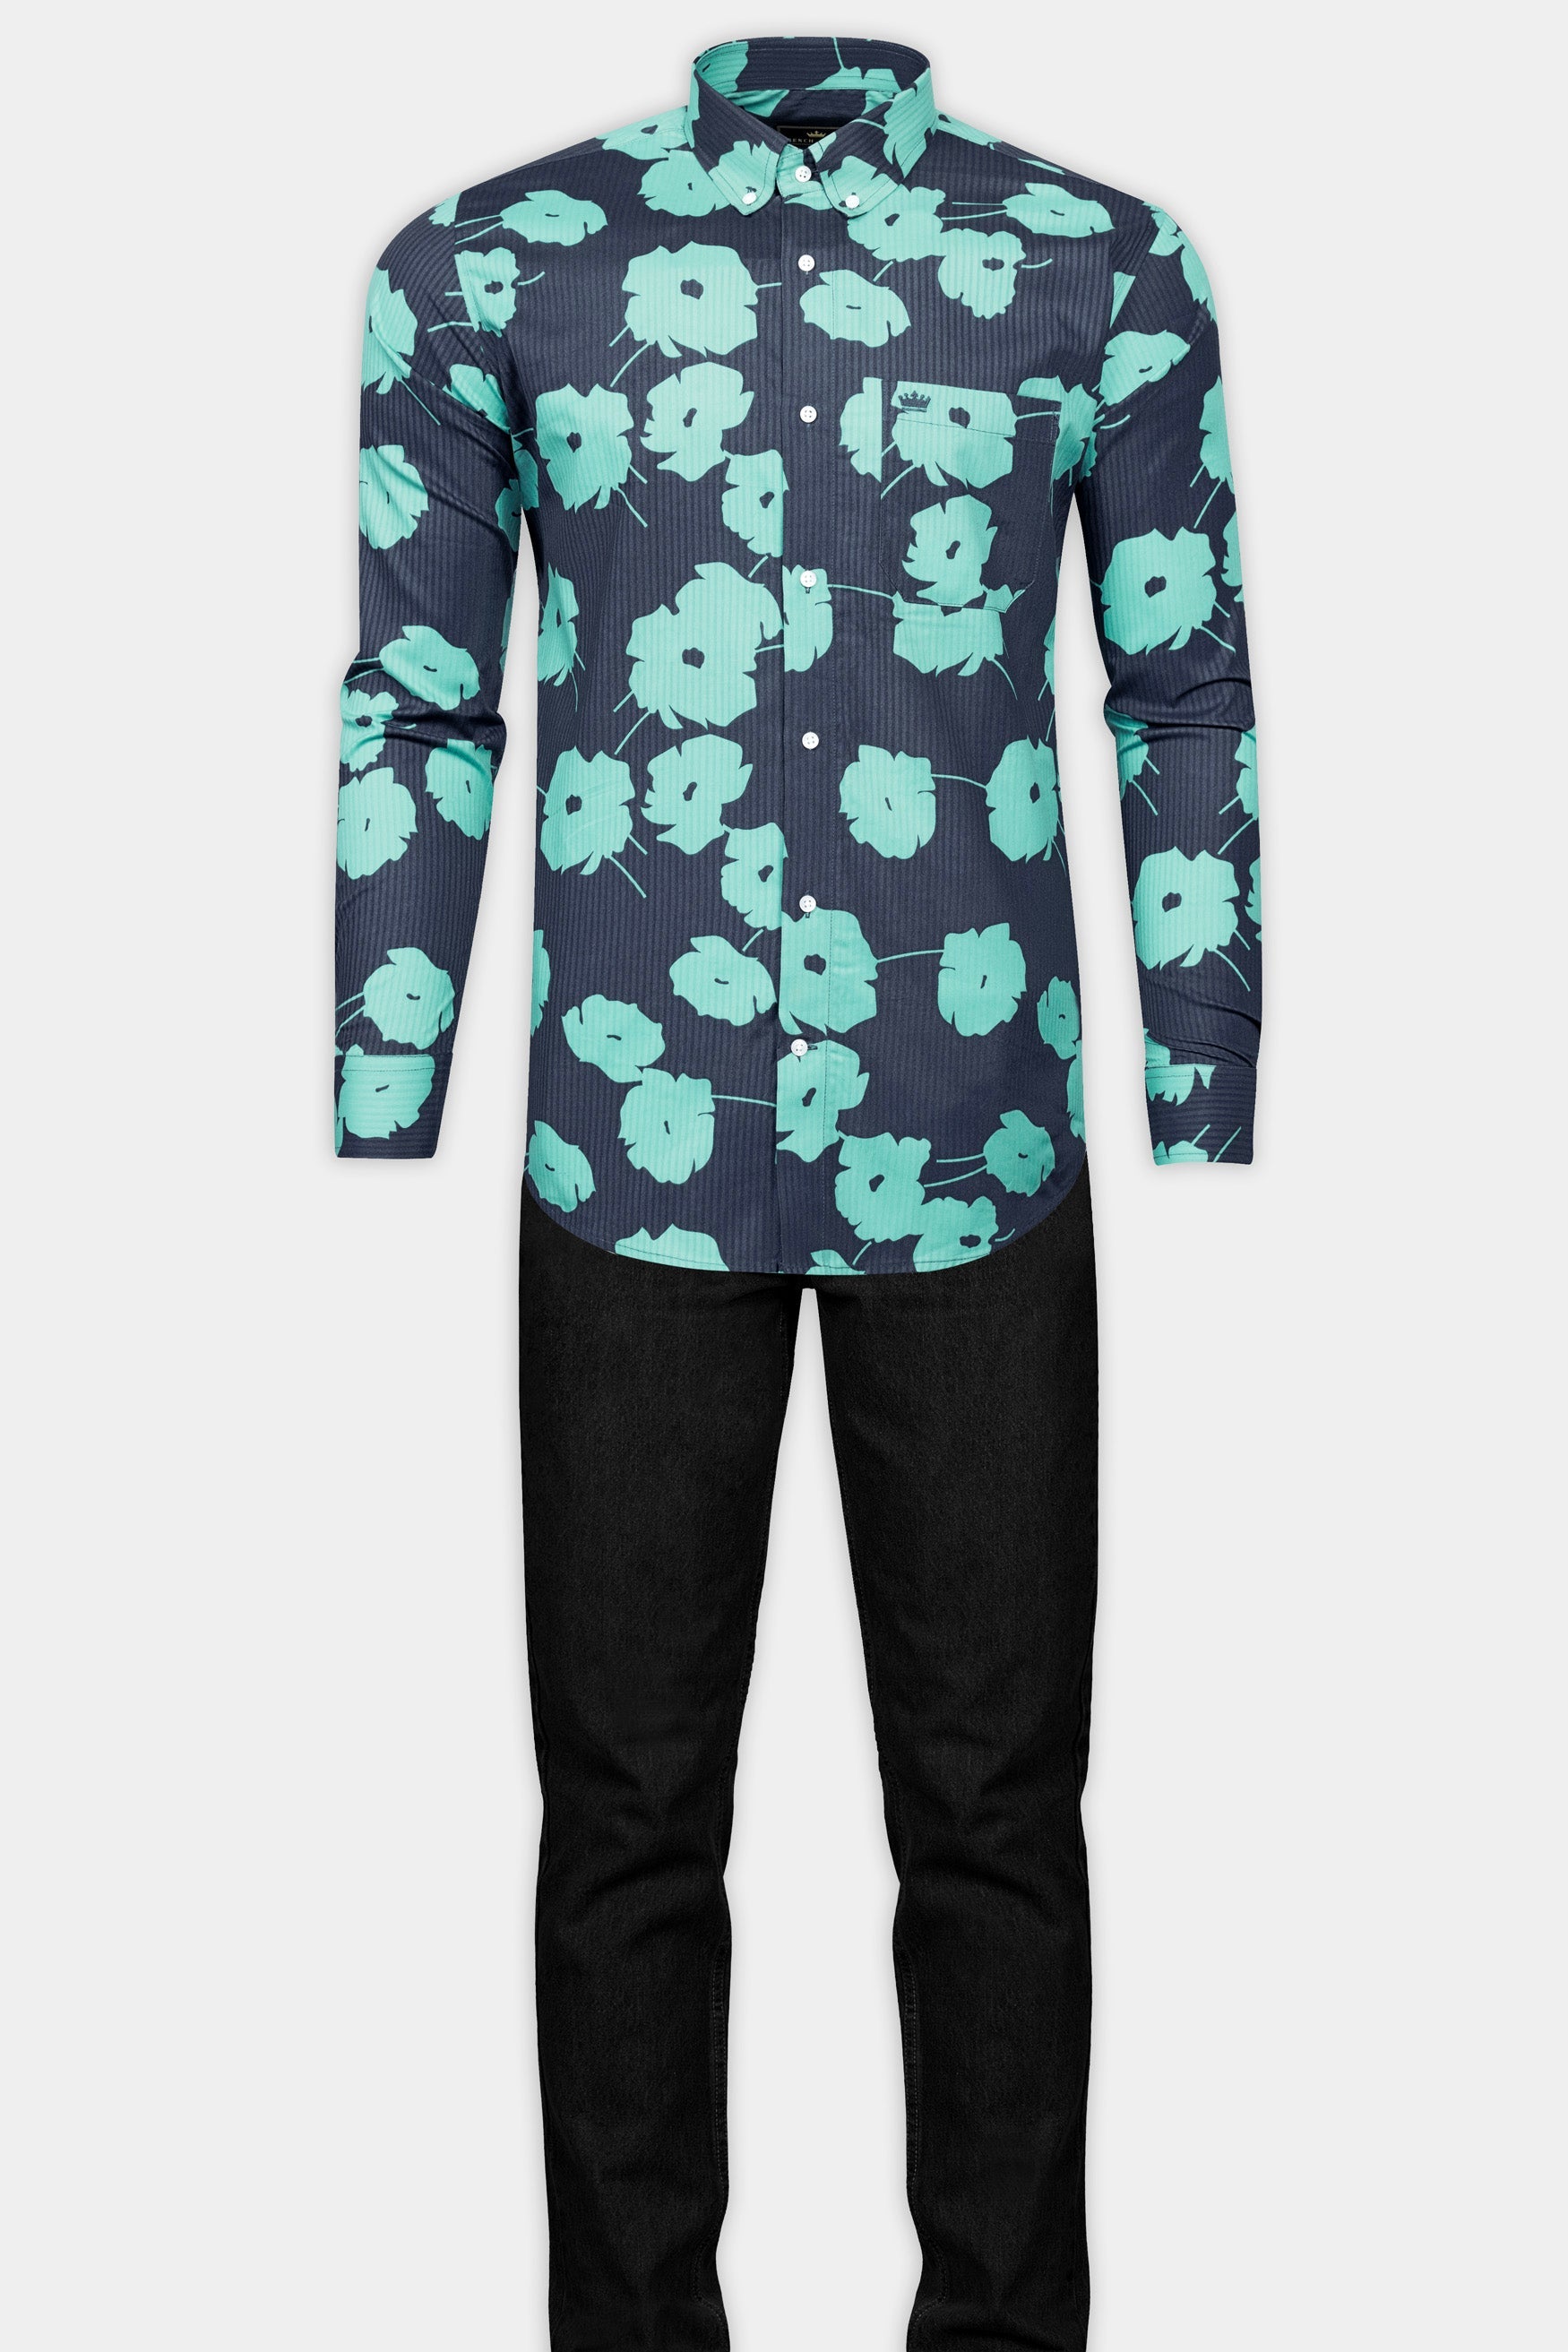 Fiord Blue with Tiffany Blue Flower Printed chambray denim shirt